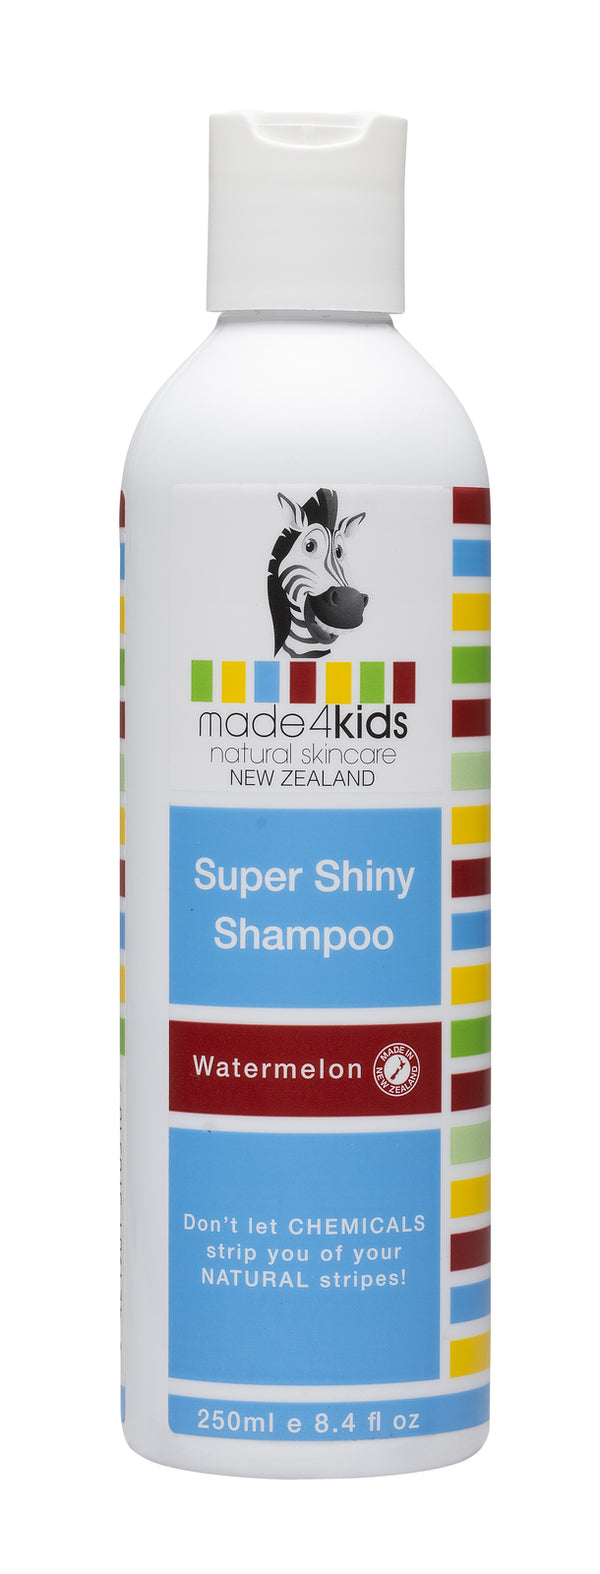 Made4Kids: Super Shiny Shampoo - Watermelon (250ml)